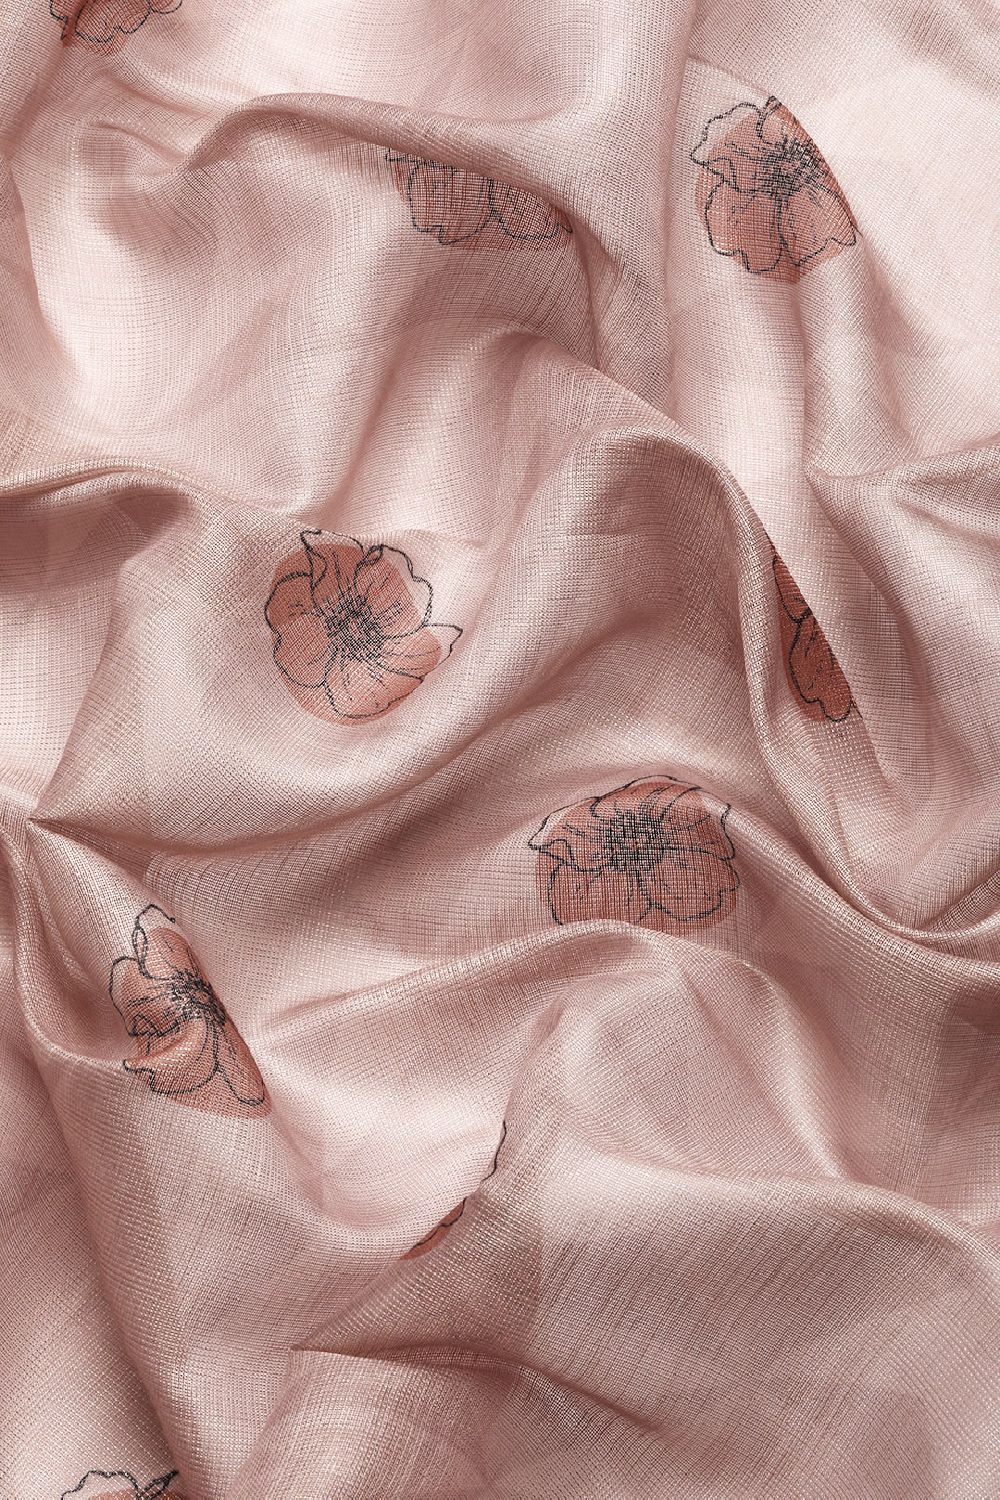 Women's Peach Cotton Silk Floral Saree